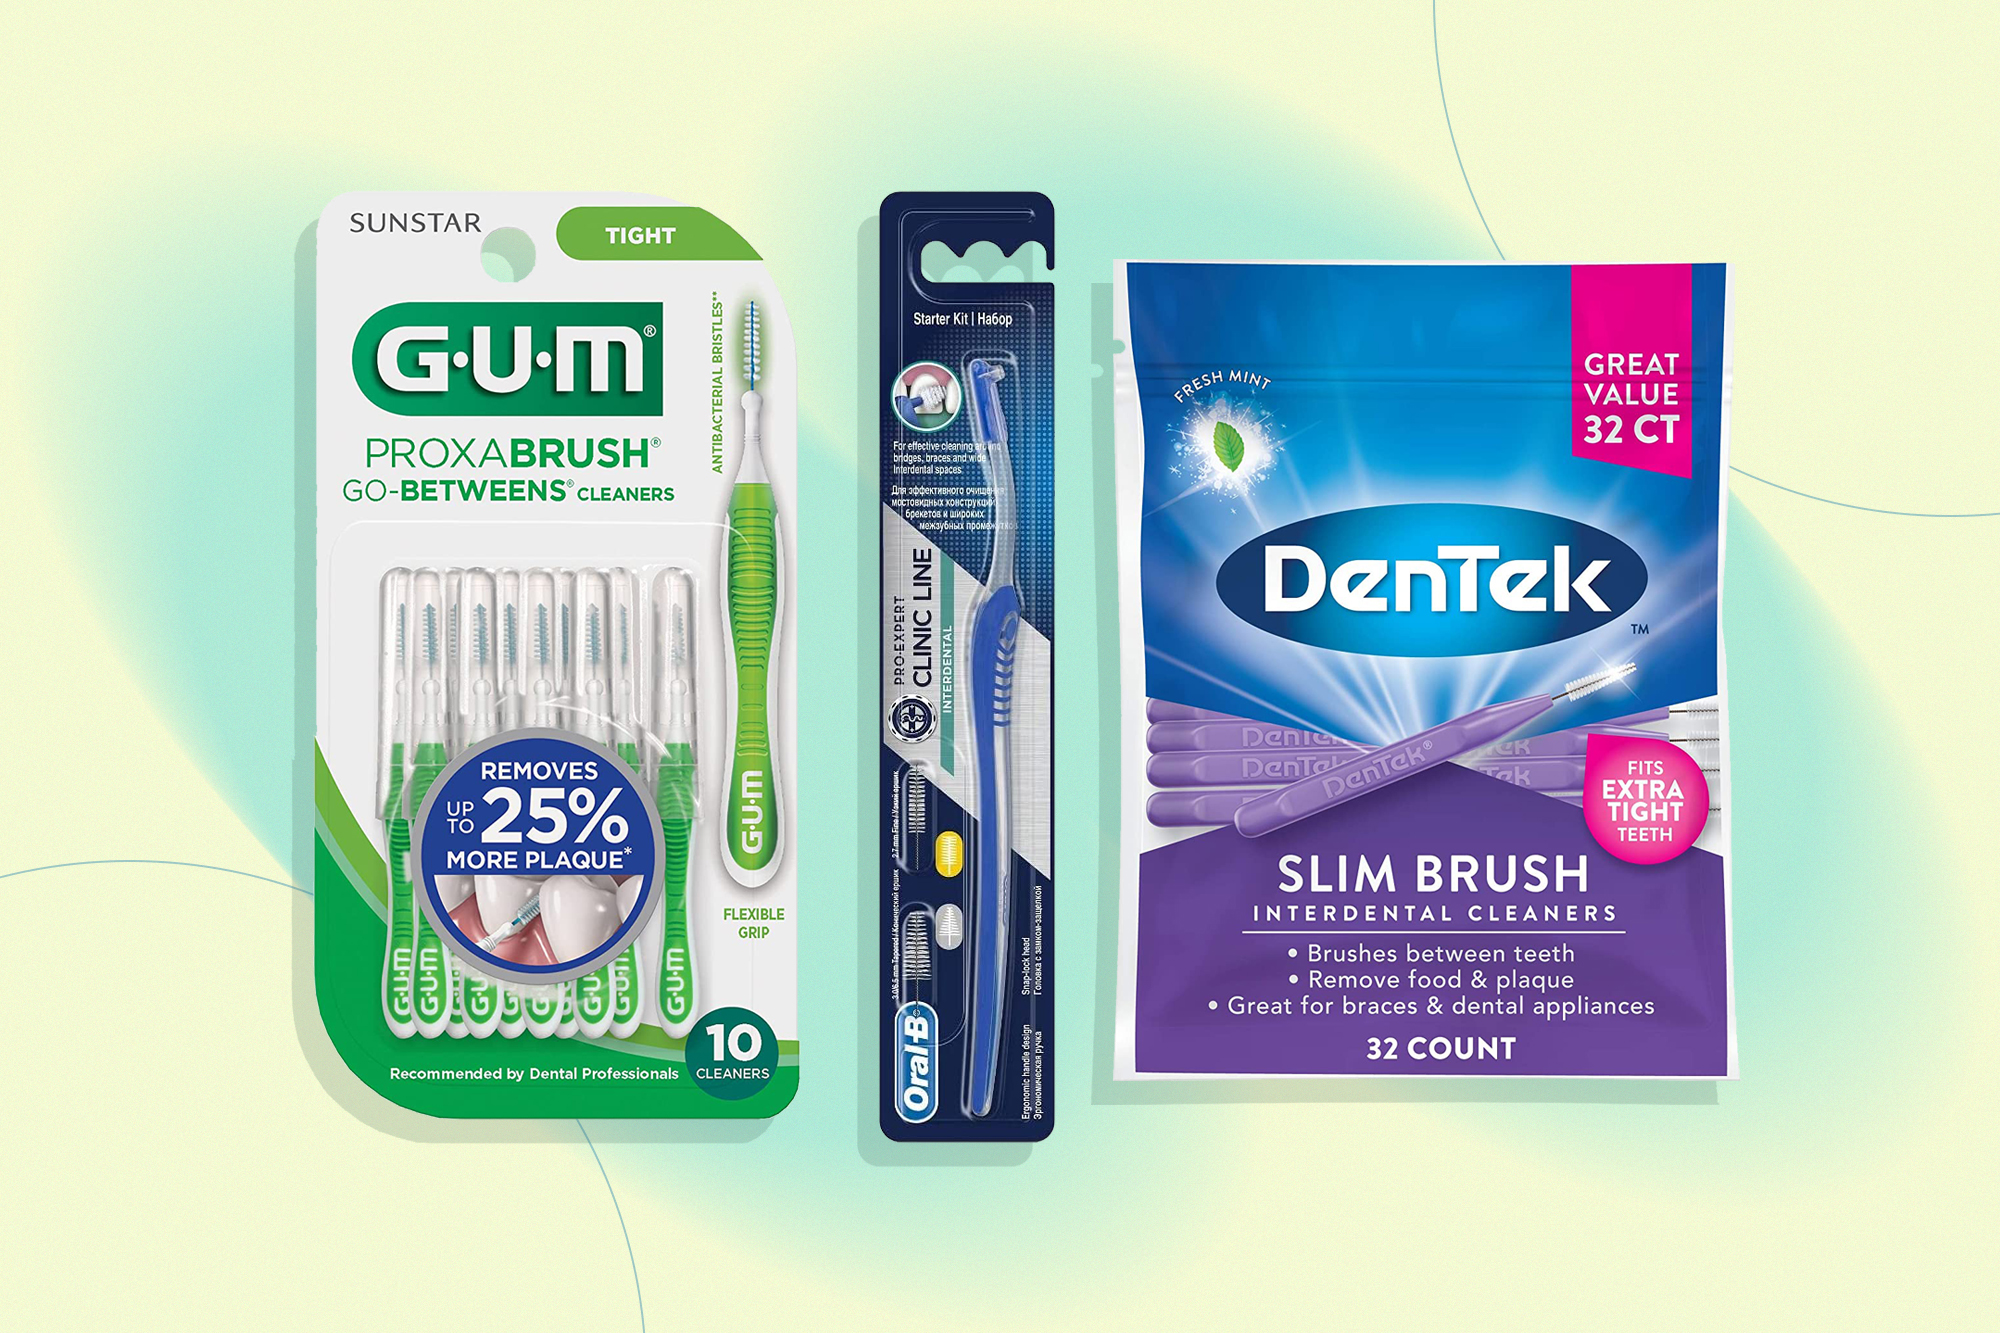 DenTek Slim Brush Interdental Cleansers, Extra Tight, Mouthwash